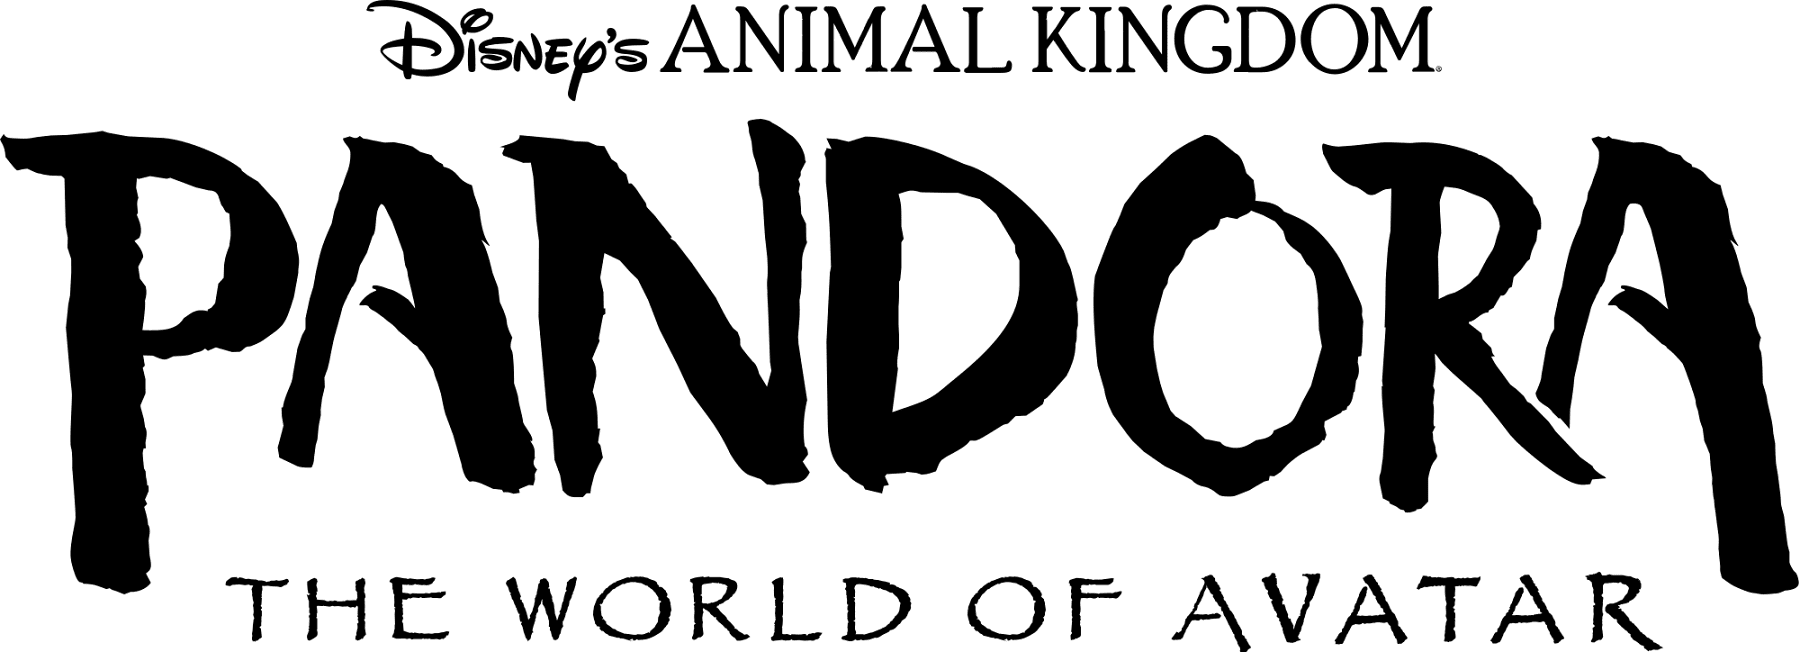 Disney Animal Kingdom Shirt Svg - 193+ SVG Cut File